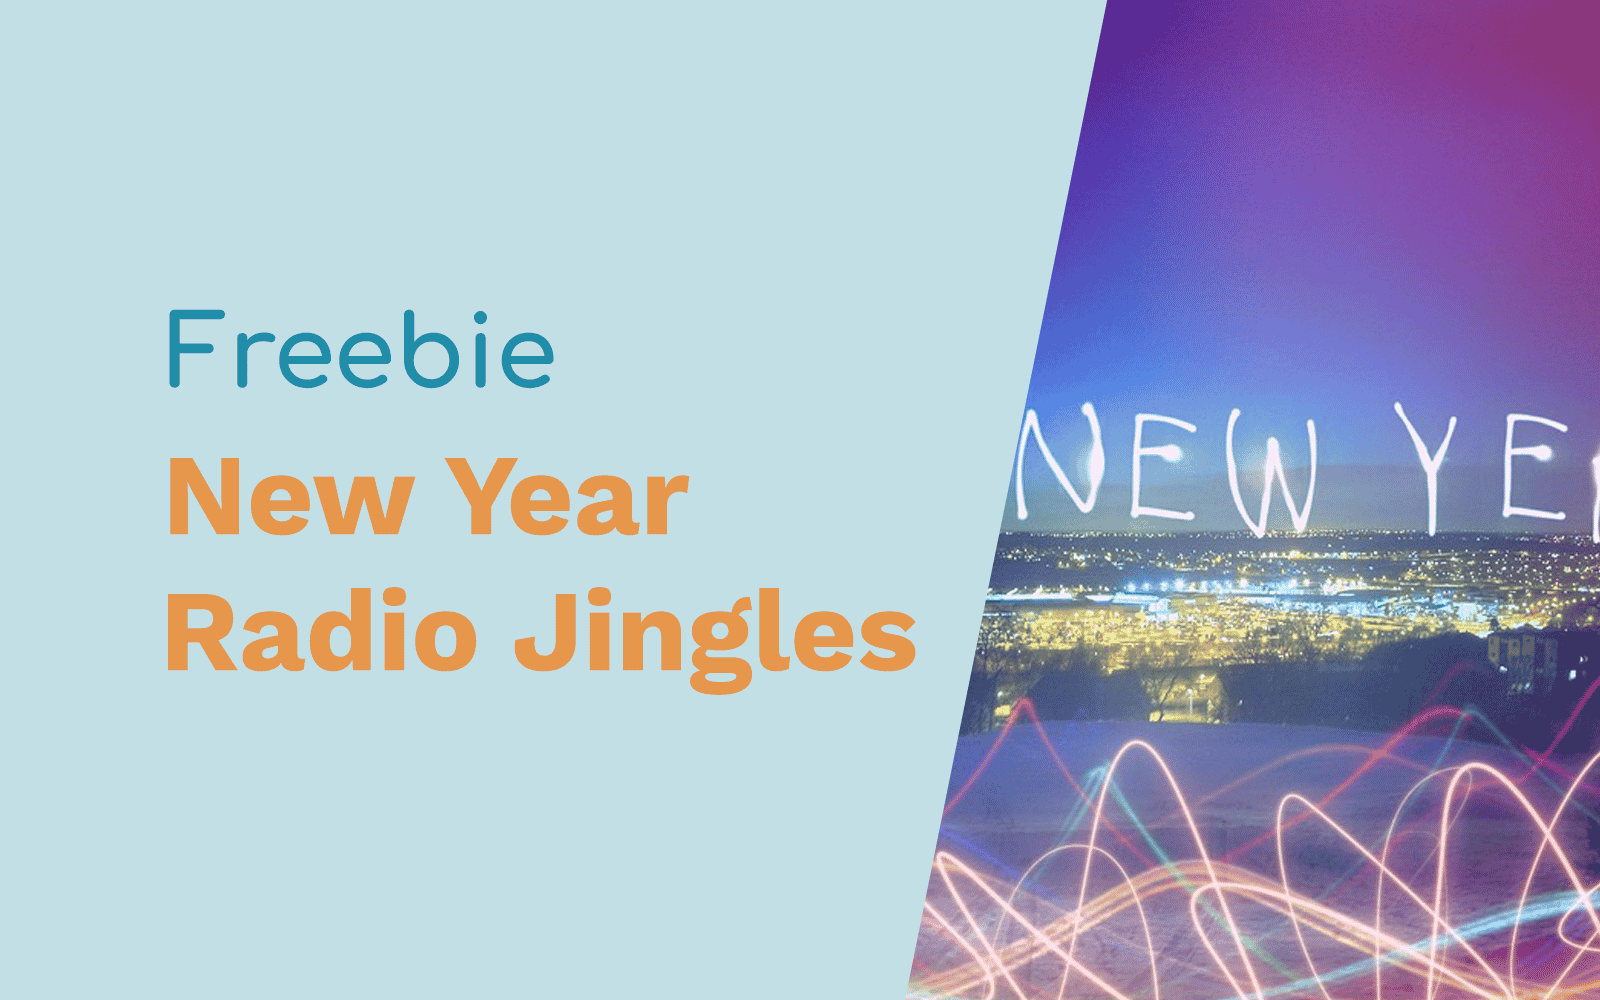 Radio Jingles for the New Year Free Jingles new year radio jingles Music Radio Creative